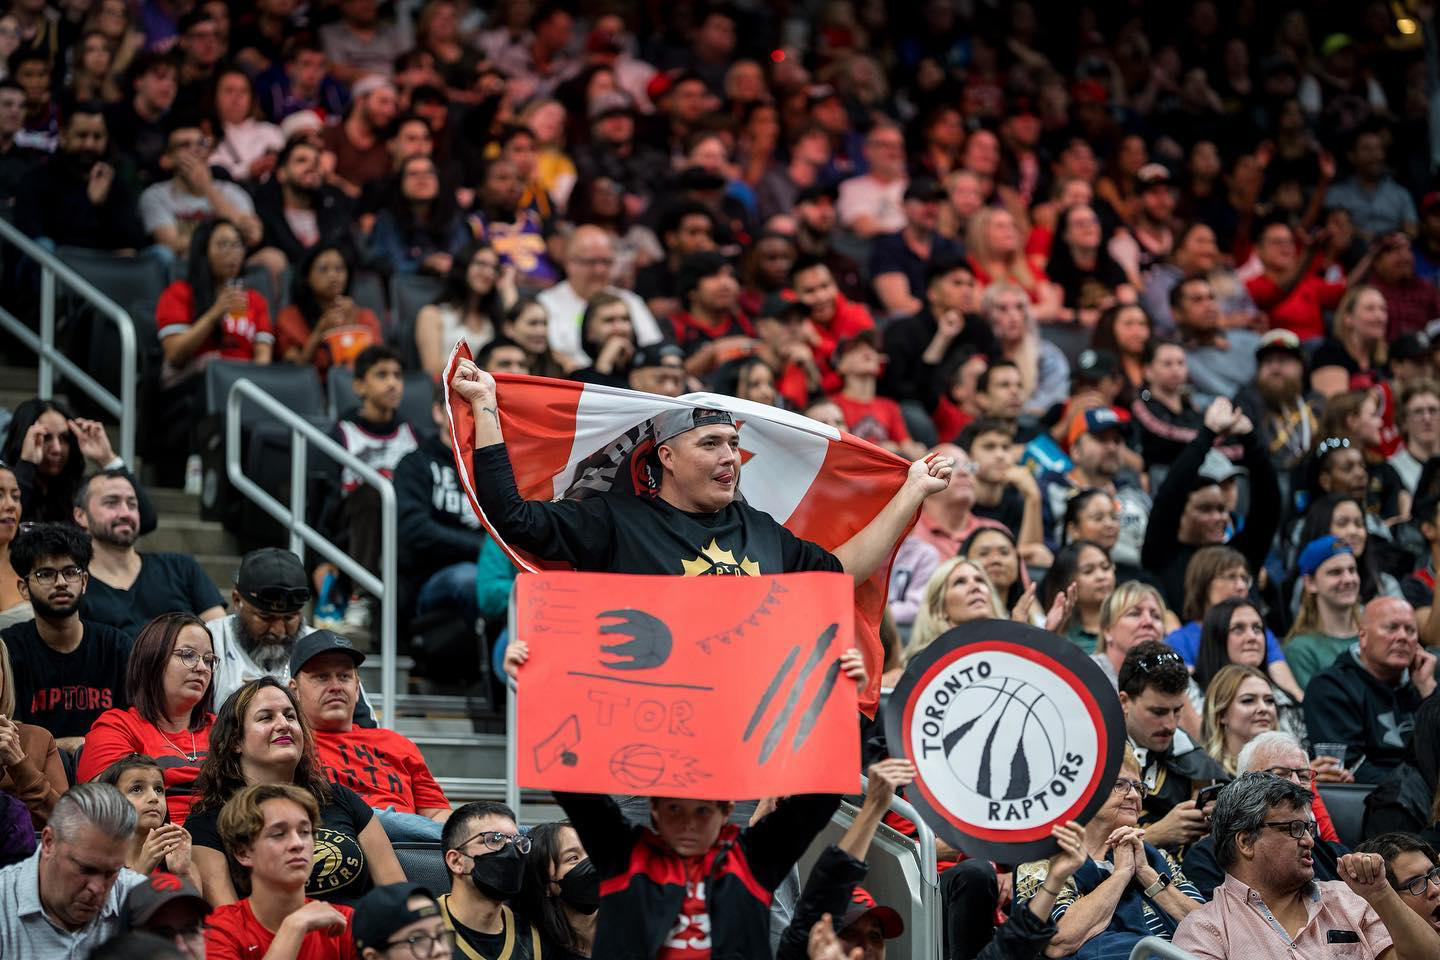 Toronto Raptors - Our fans roll deep